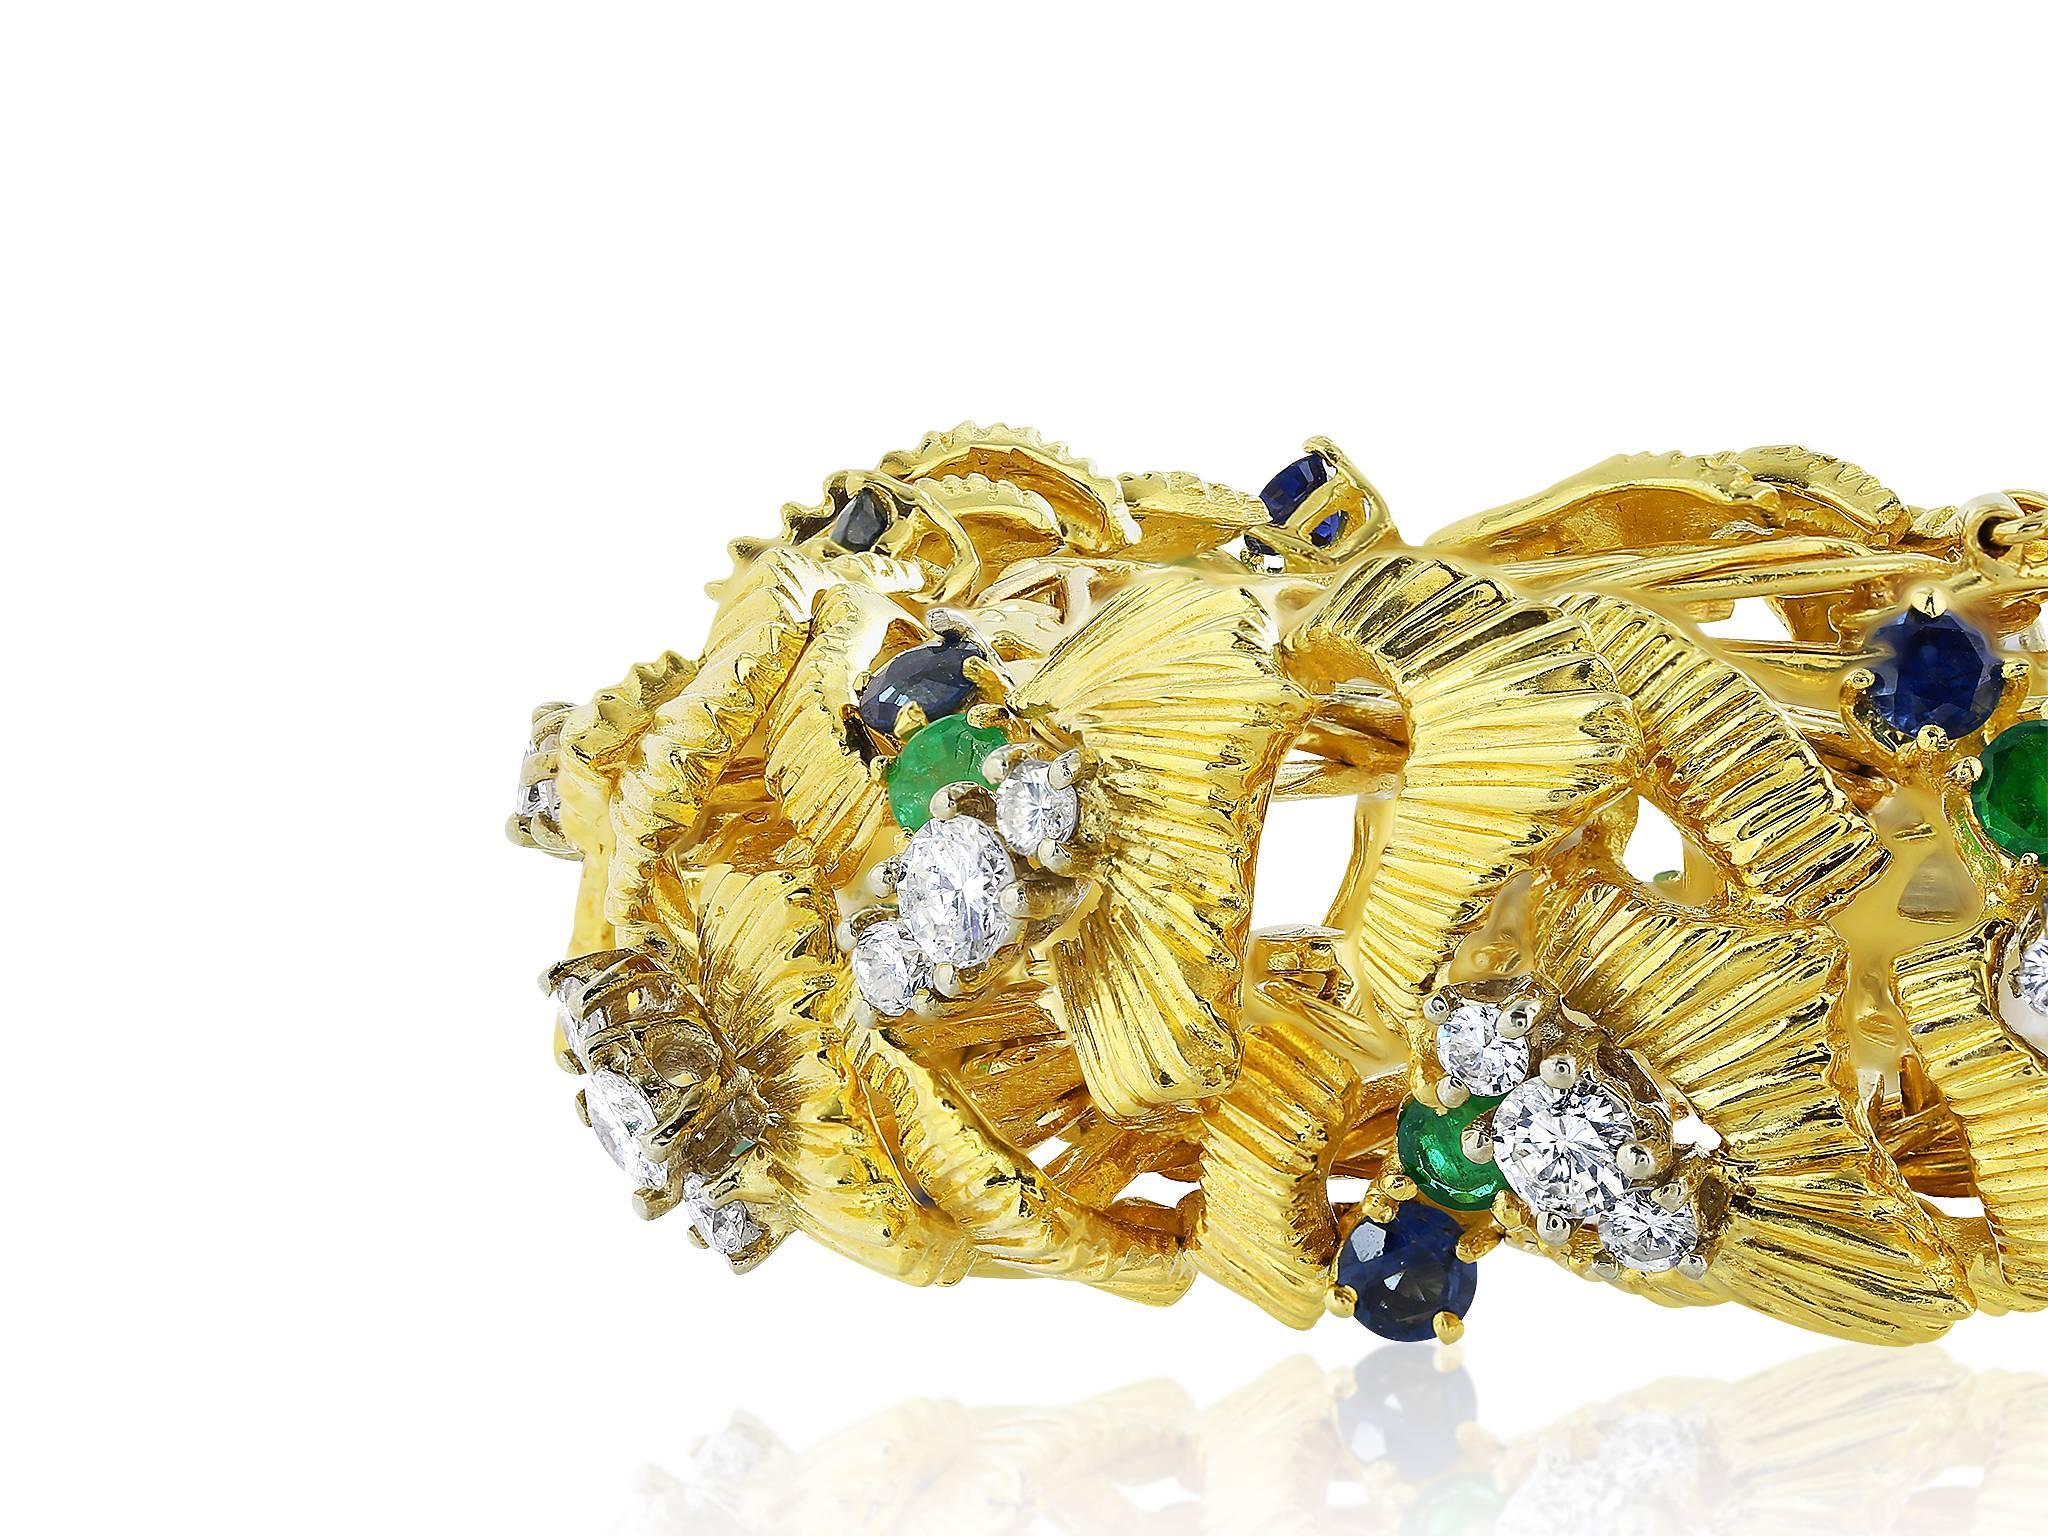 18 karat yellow gold semi flexible open work estate bracelet with full cut diamond, sapphire and emerald accents.